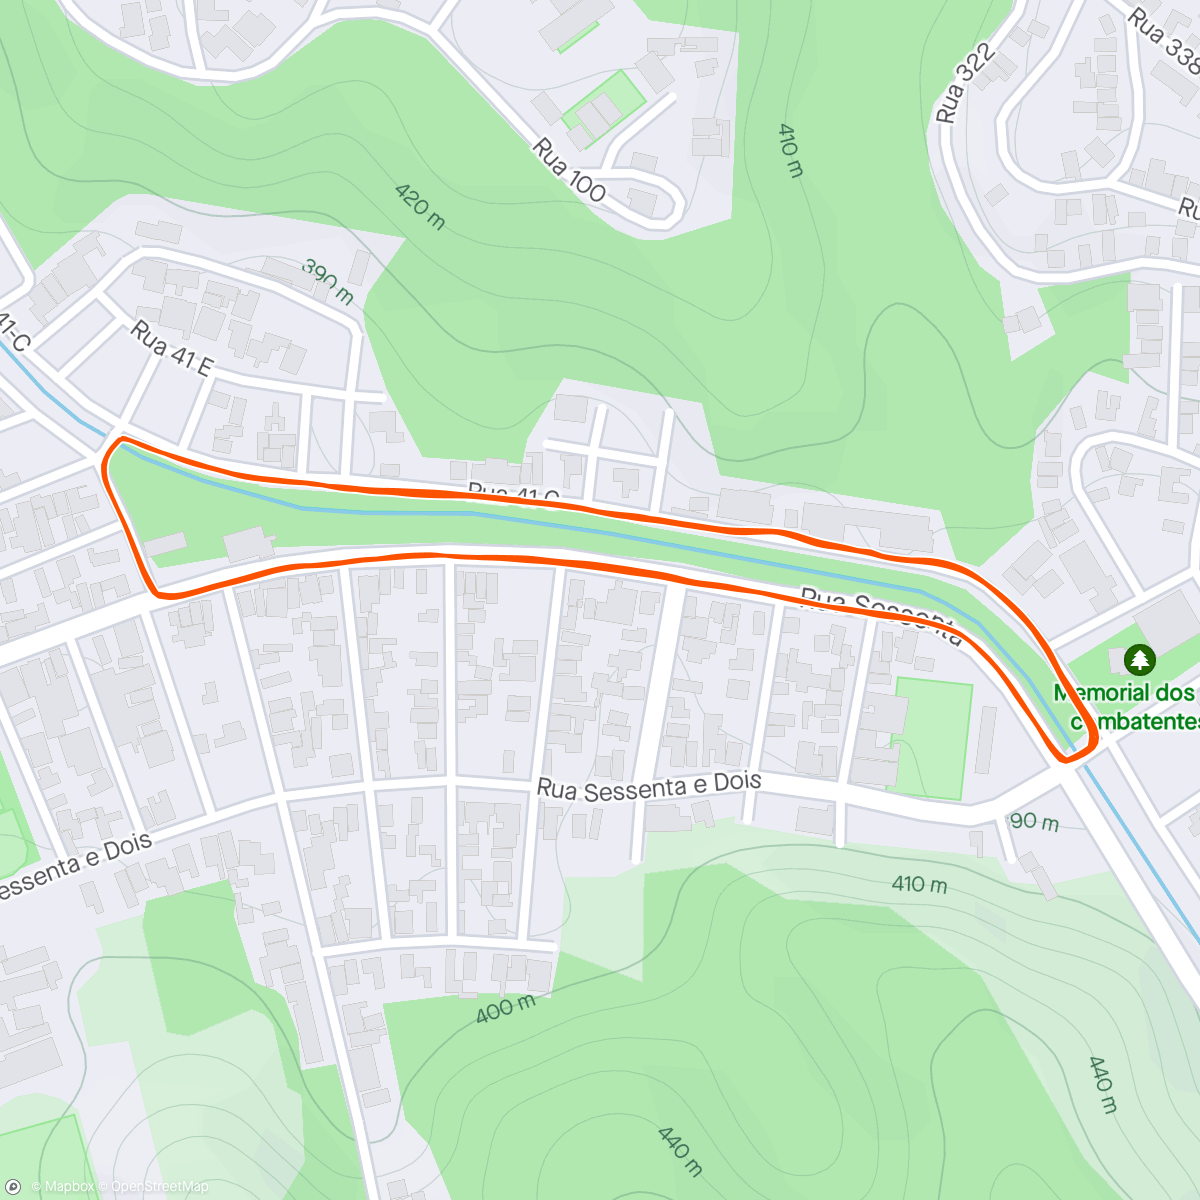 Map of the activity, 7km ritimado